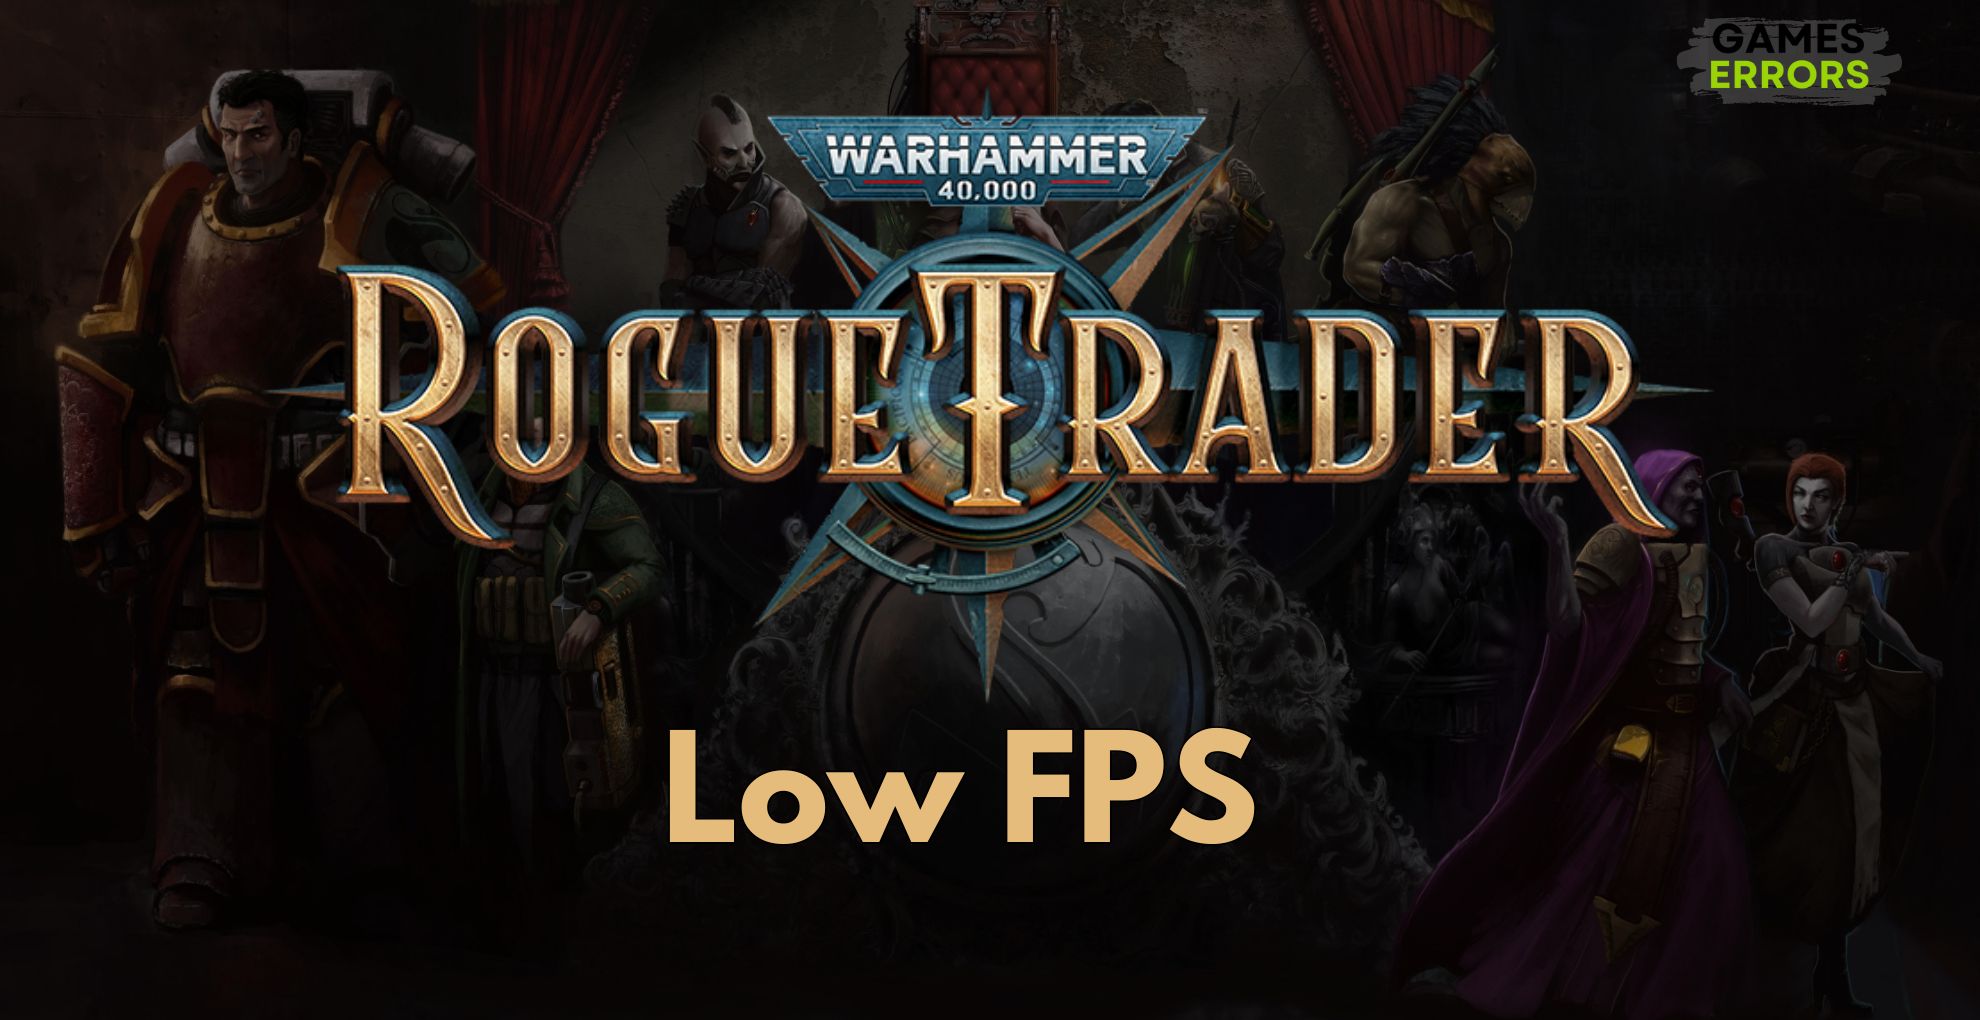 Warhammer 40,000 Rogue Trader Low FPS